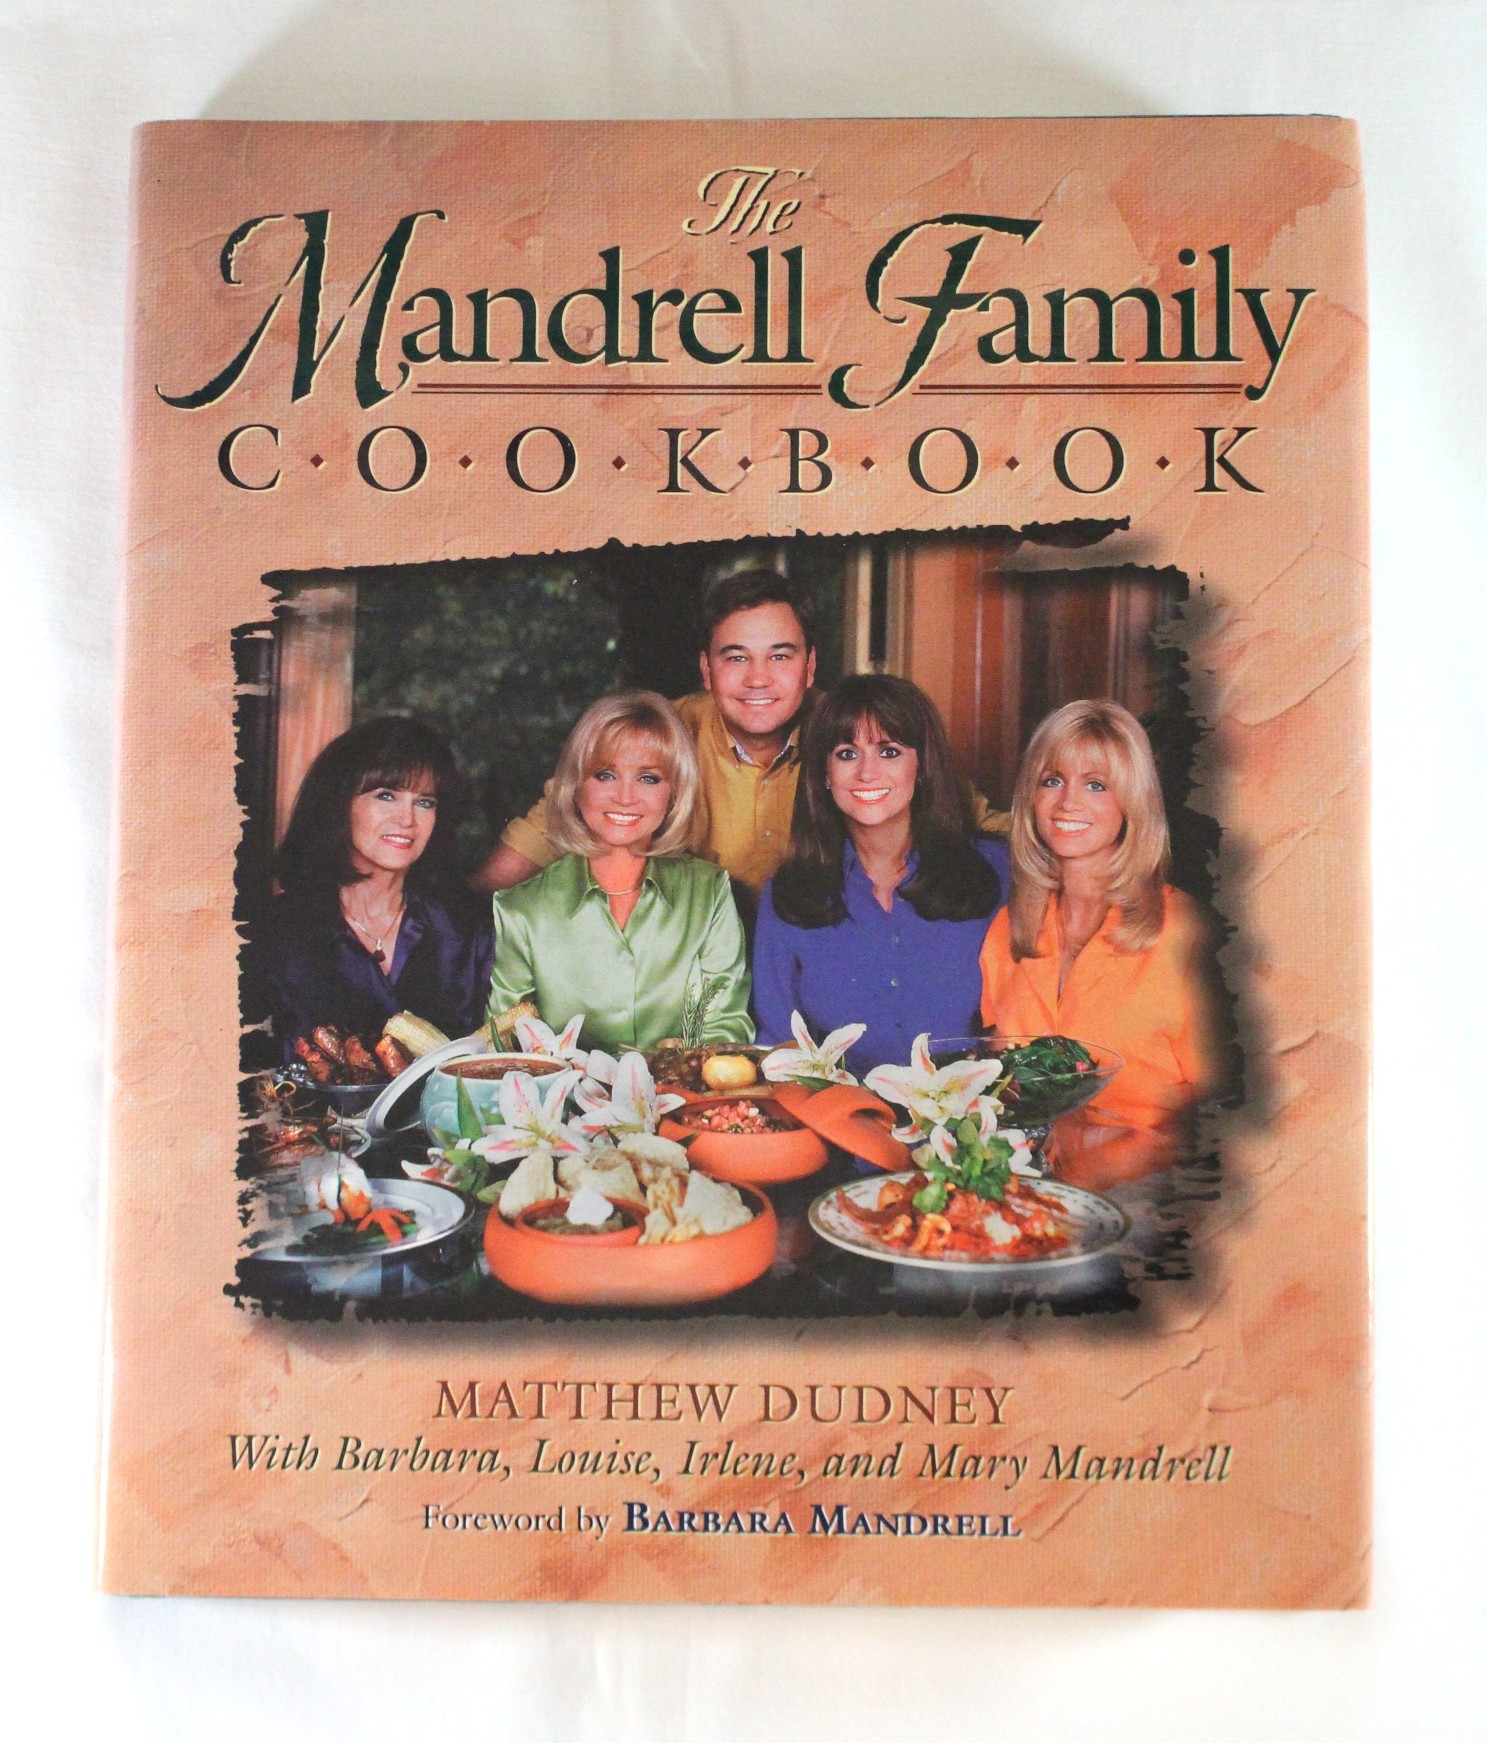 Barbara Mandrell - autographed book “The Mandrell Family Cookbook” 